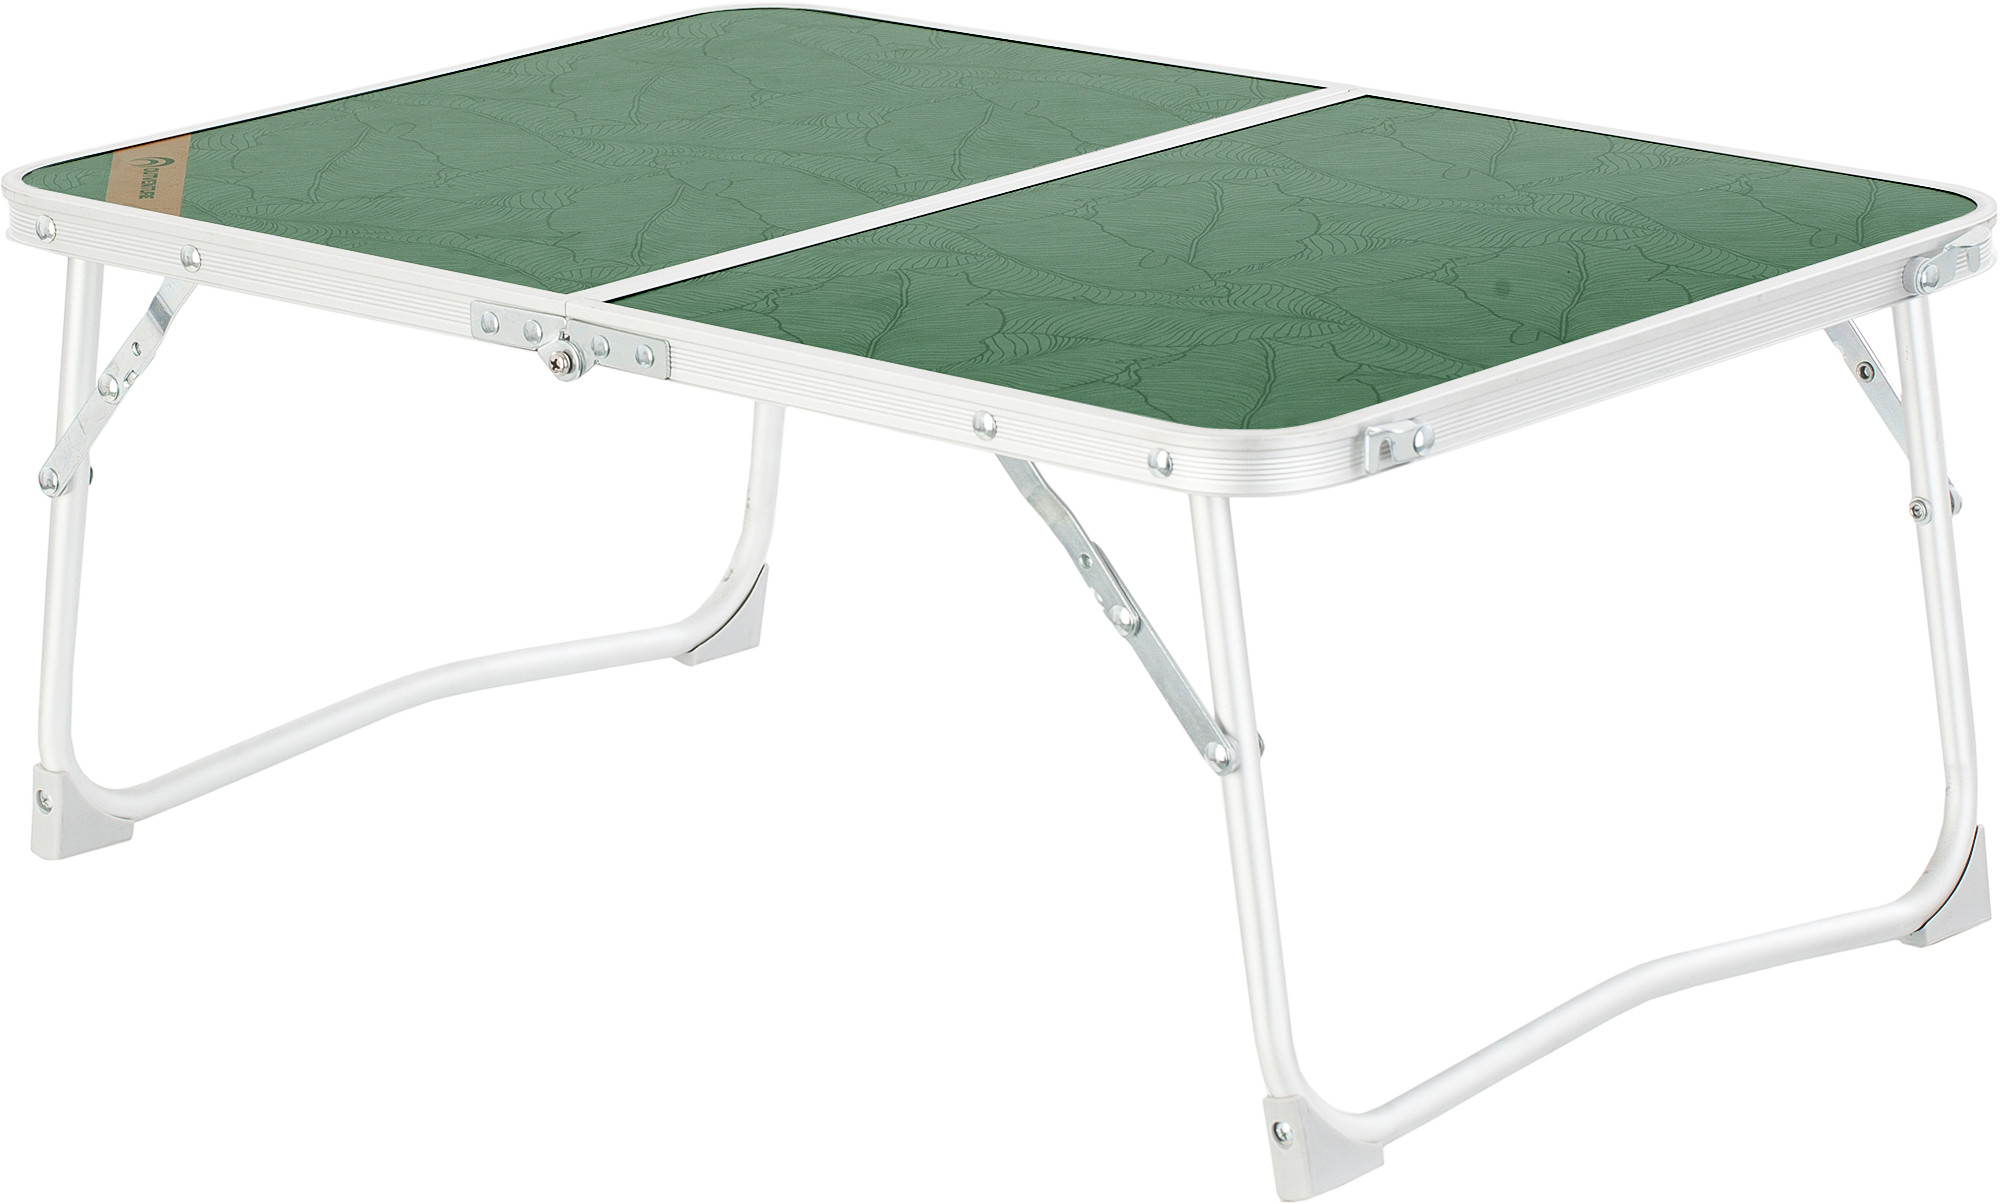 

Стол складной 1,3 кг для Кемпинга (40 х 60 х 25 см) Outventure Зеленый